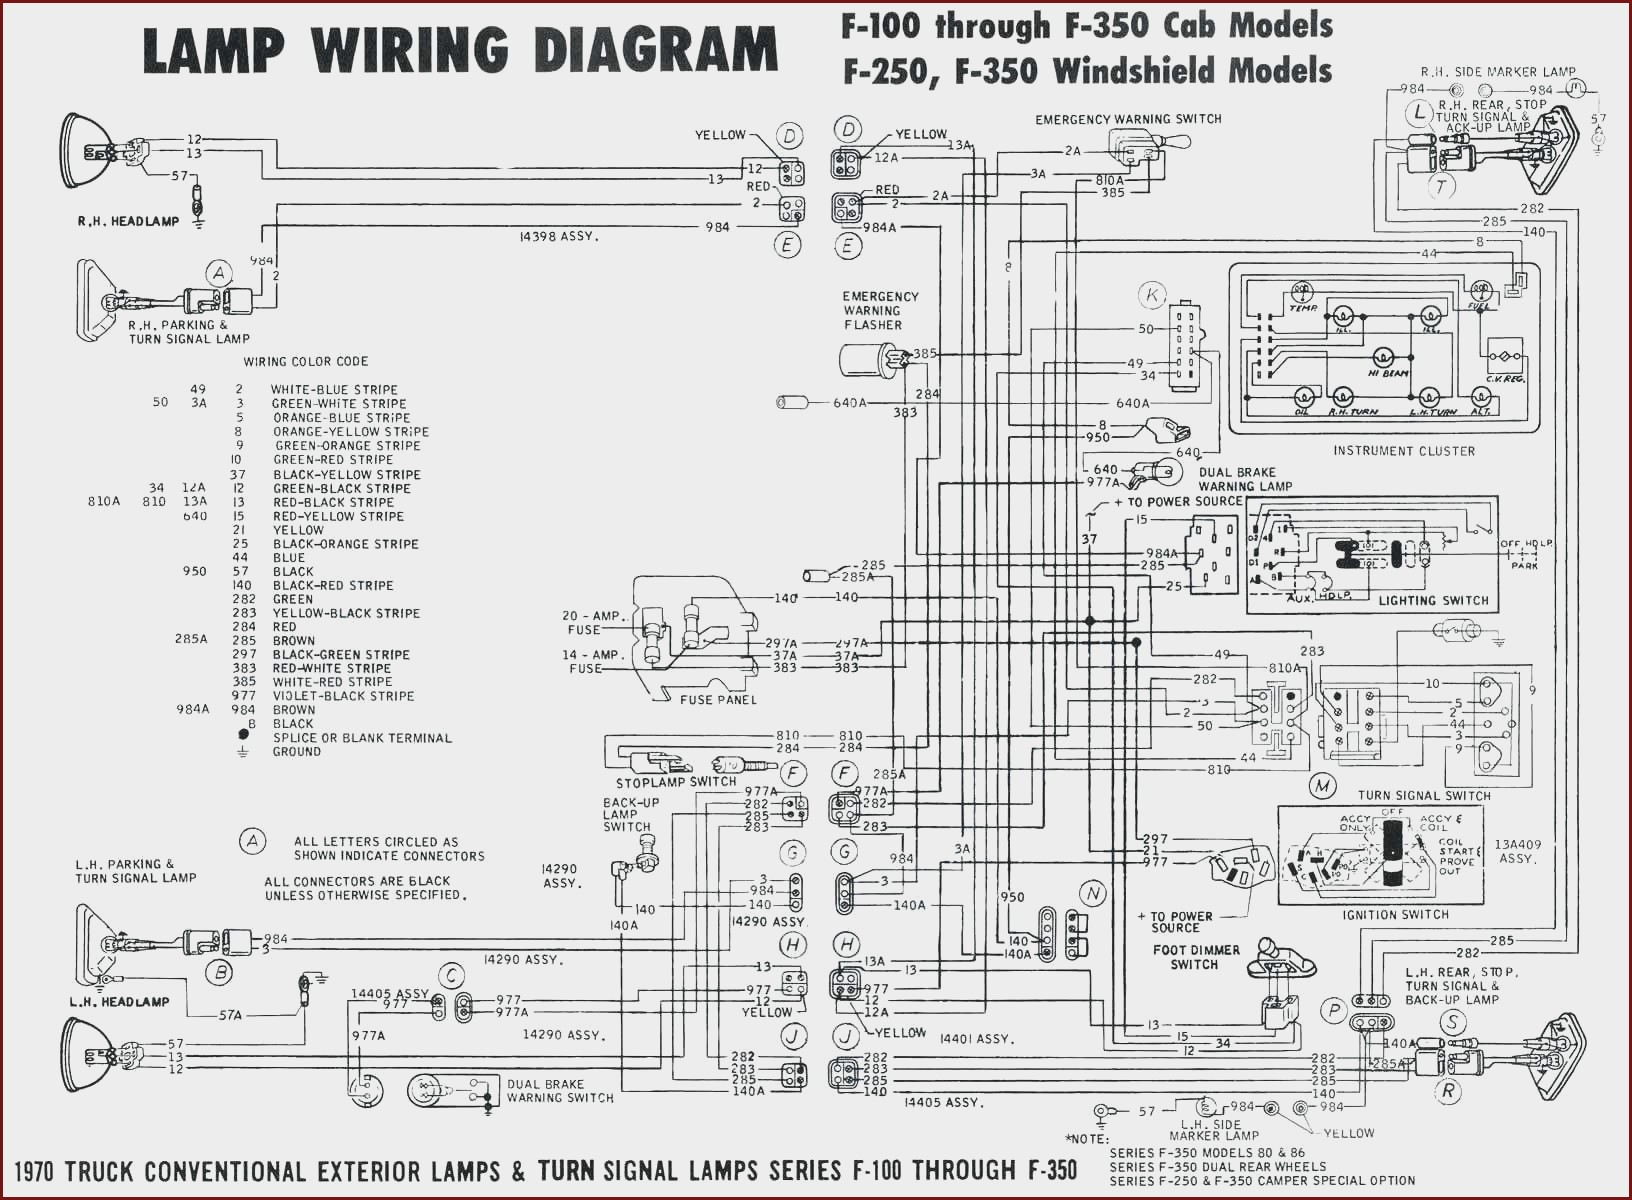 1995 Acura Integra Engine Diagram 1998 Nissan Sentra Wiring Diagram Wiring Diagram Options Of 1995 Acura Integra Engine Diagram